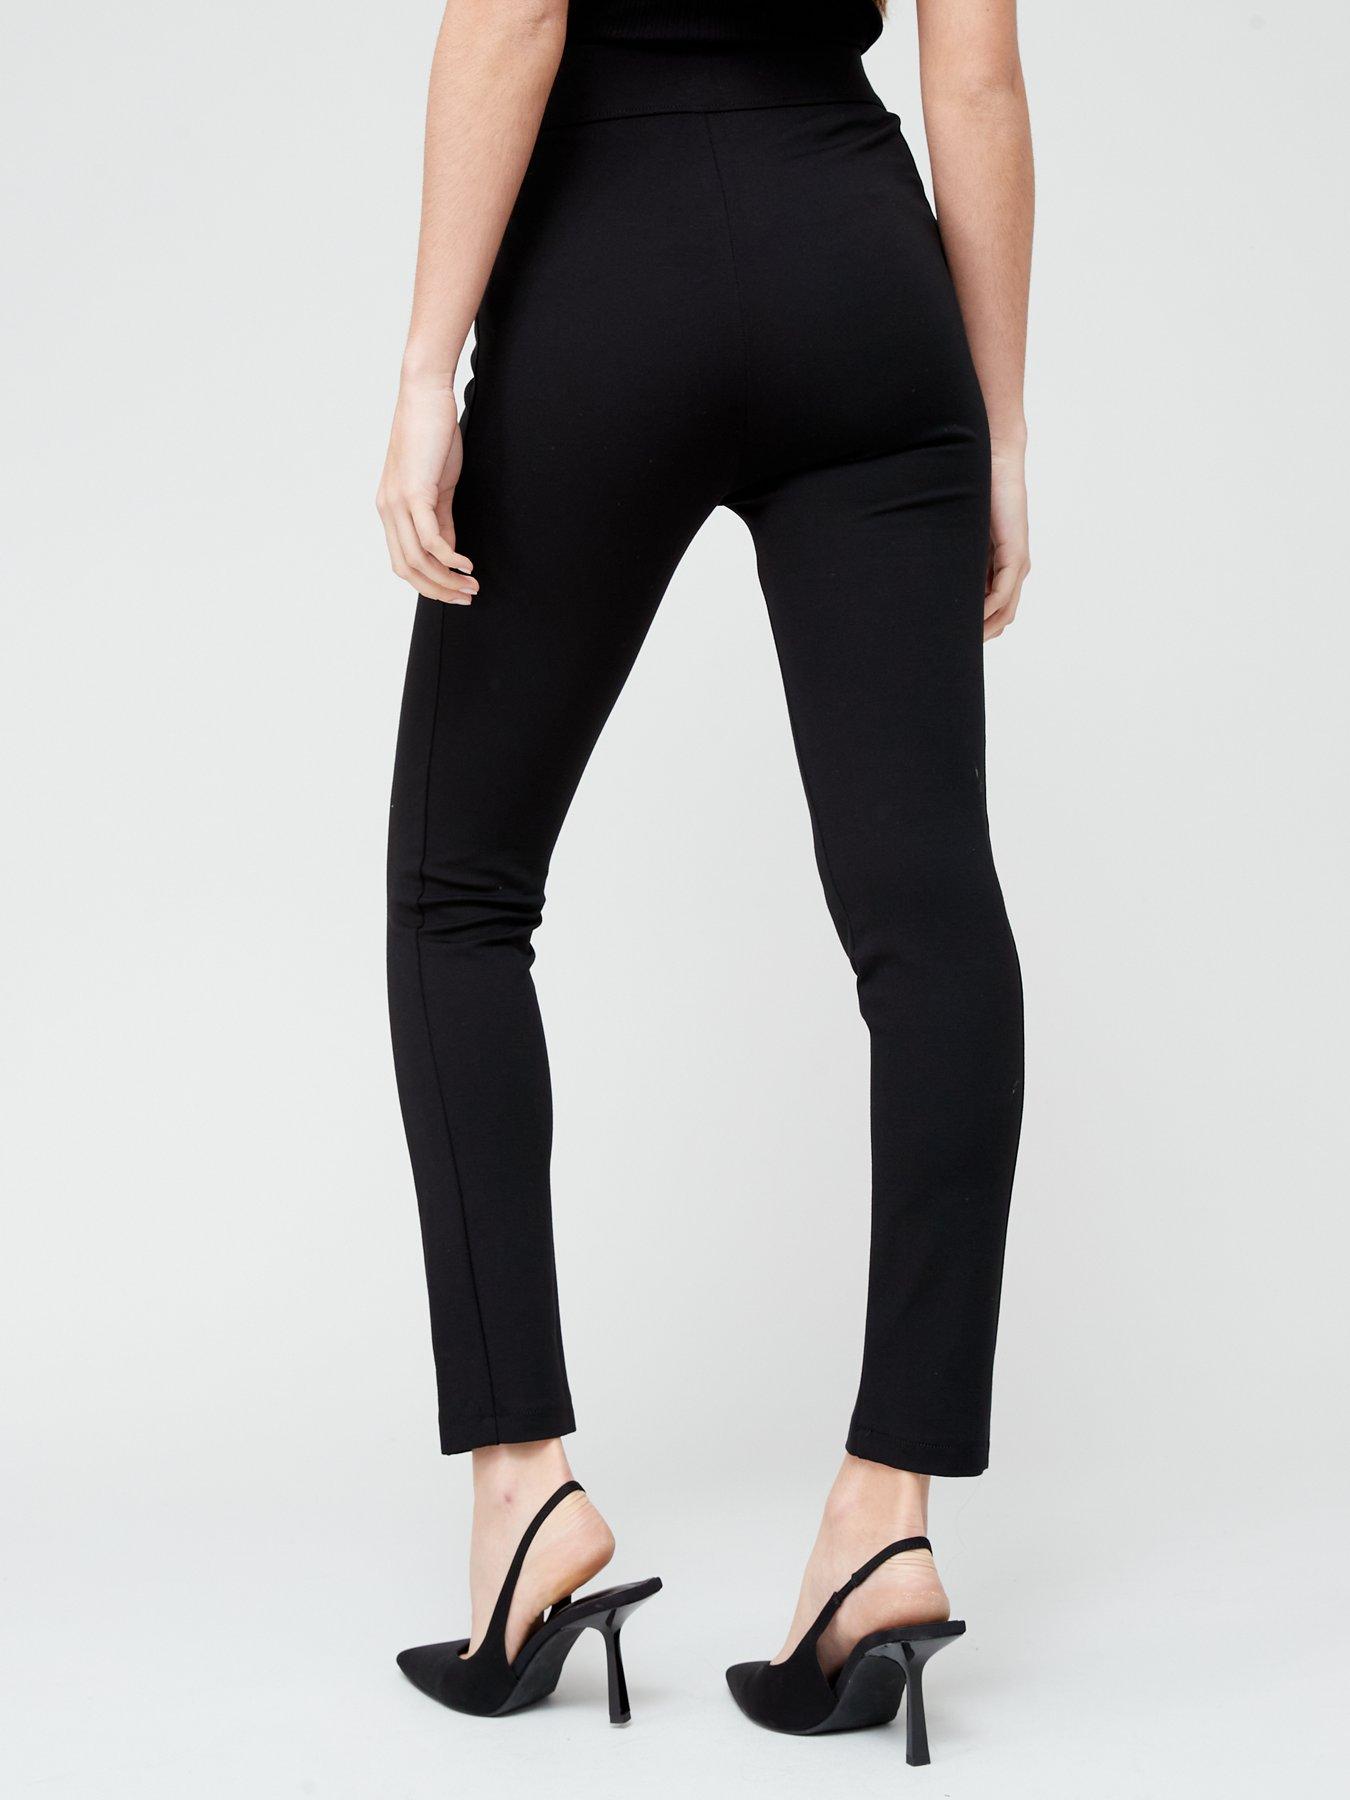 Premium Women's Stretch Ponte Pants - Wear to Work - Dressy Leggings,  Knowledge - Black, Large